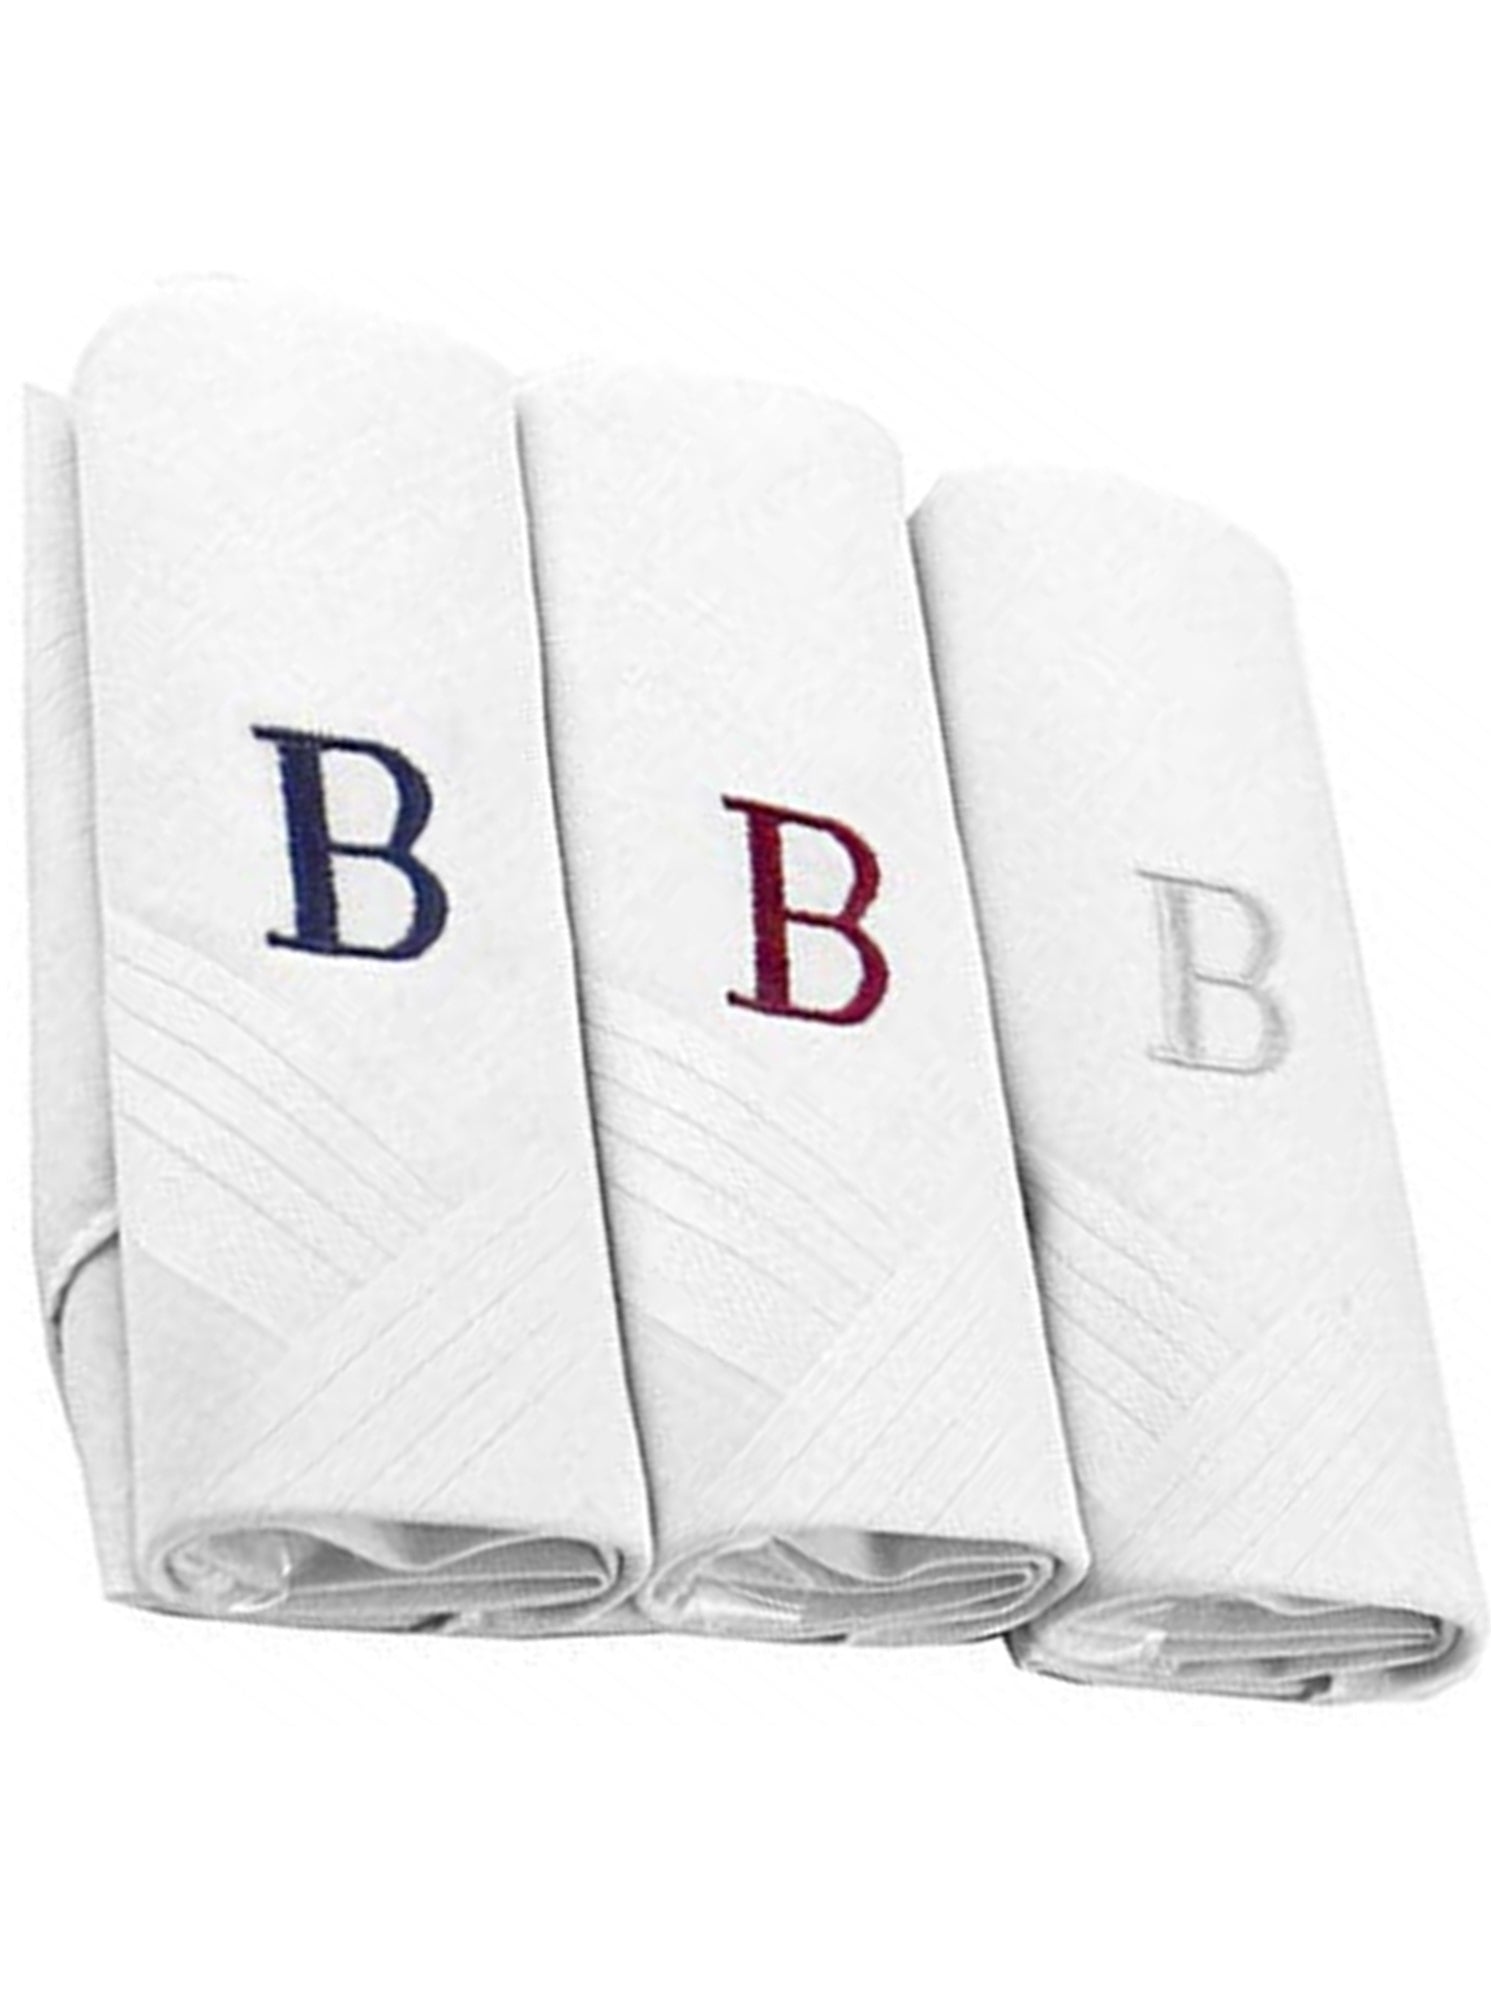 Men's Cotton Monogrammed Handkerchiefs Initial Letter Hanky Handkerchiefs TheDapperTie White B 2 x 3 Pack  